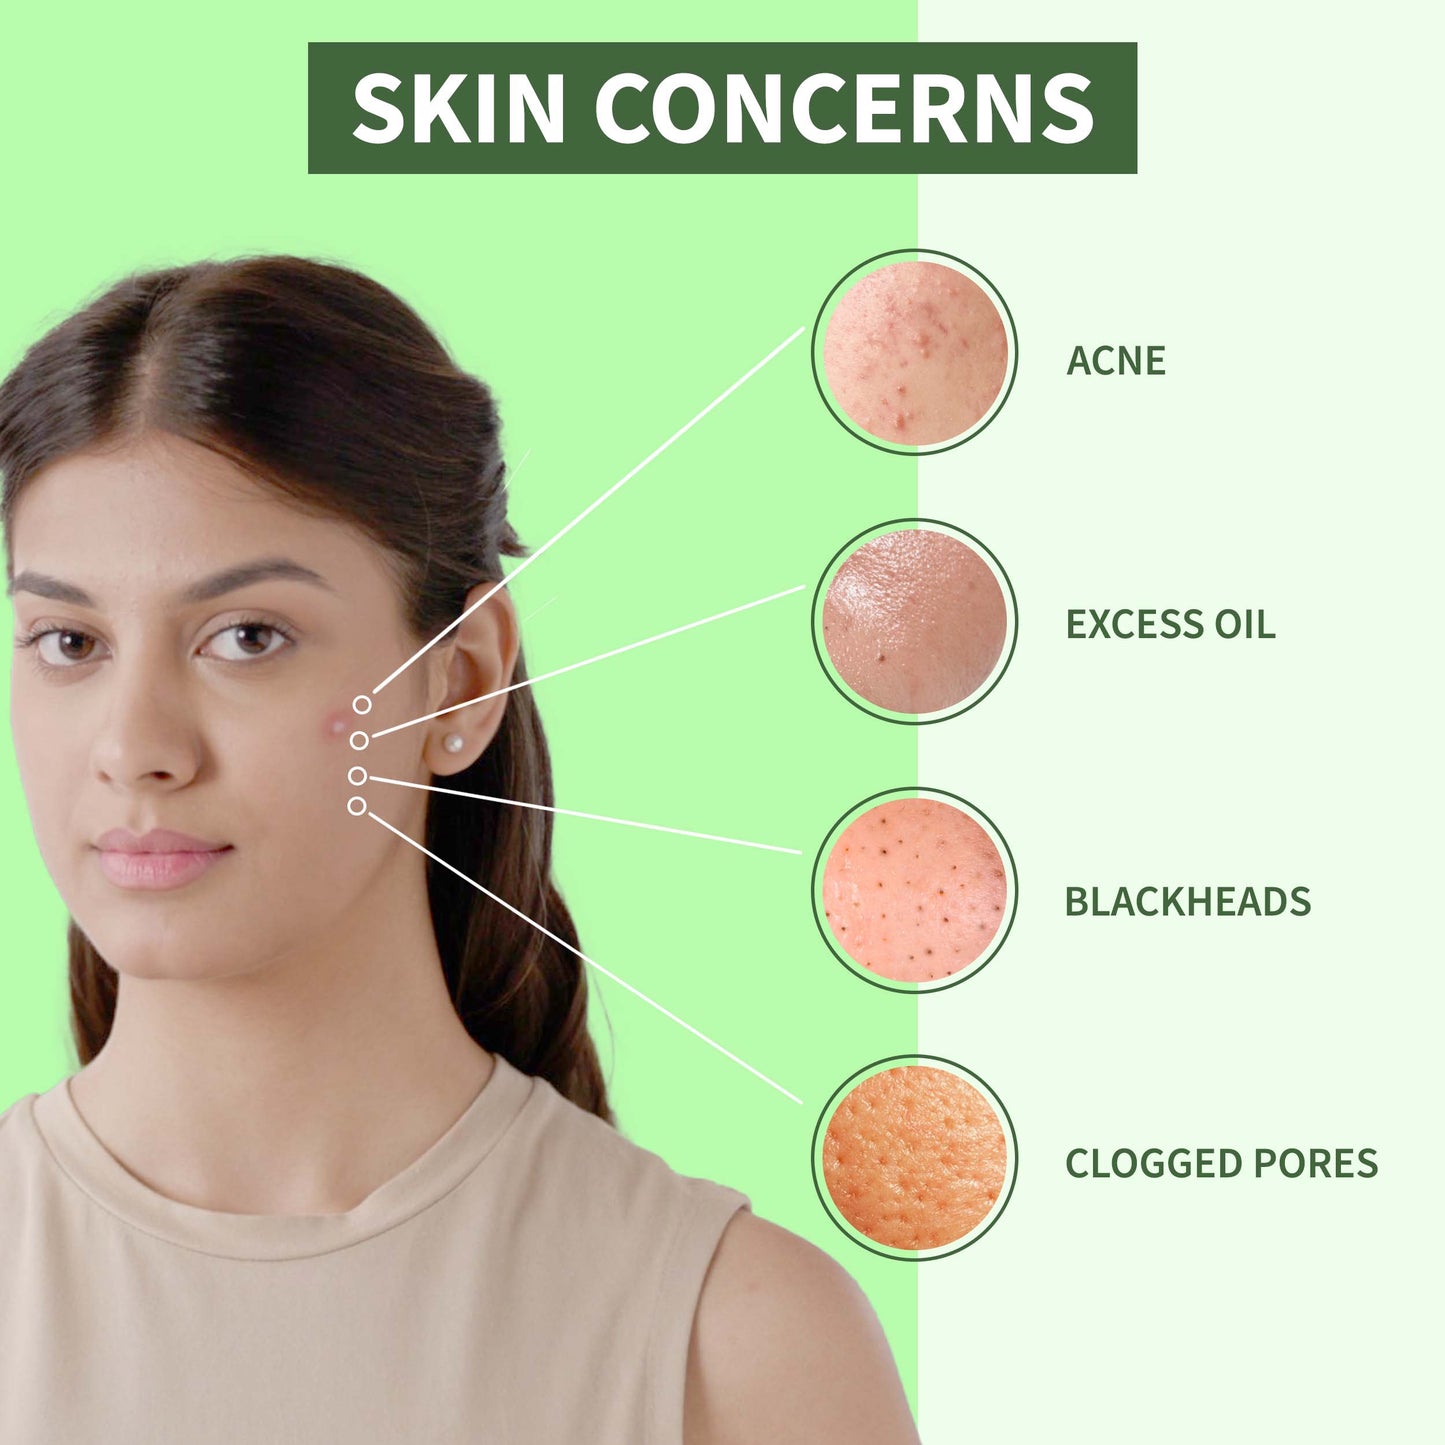 DermDoc Anti Acne Facial Kit with Salicylic Acid For Clear & Acne Free Skin (34 g)